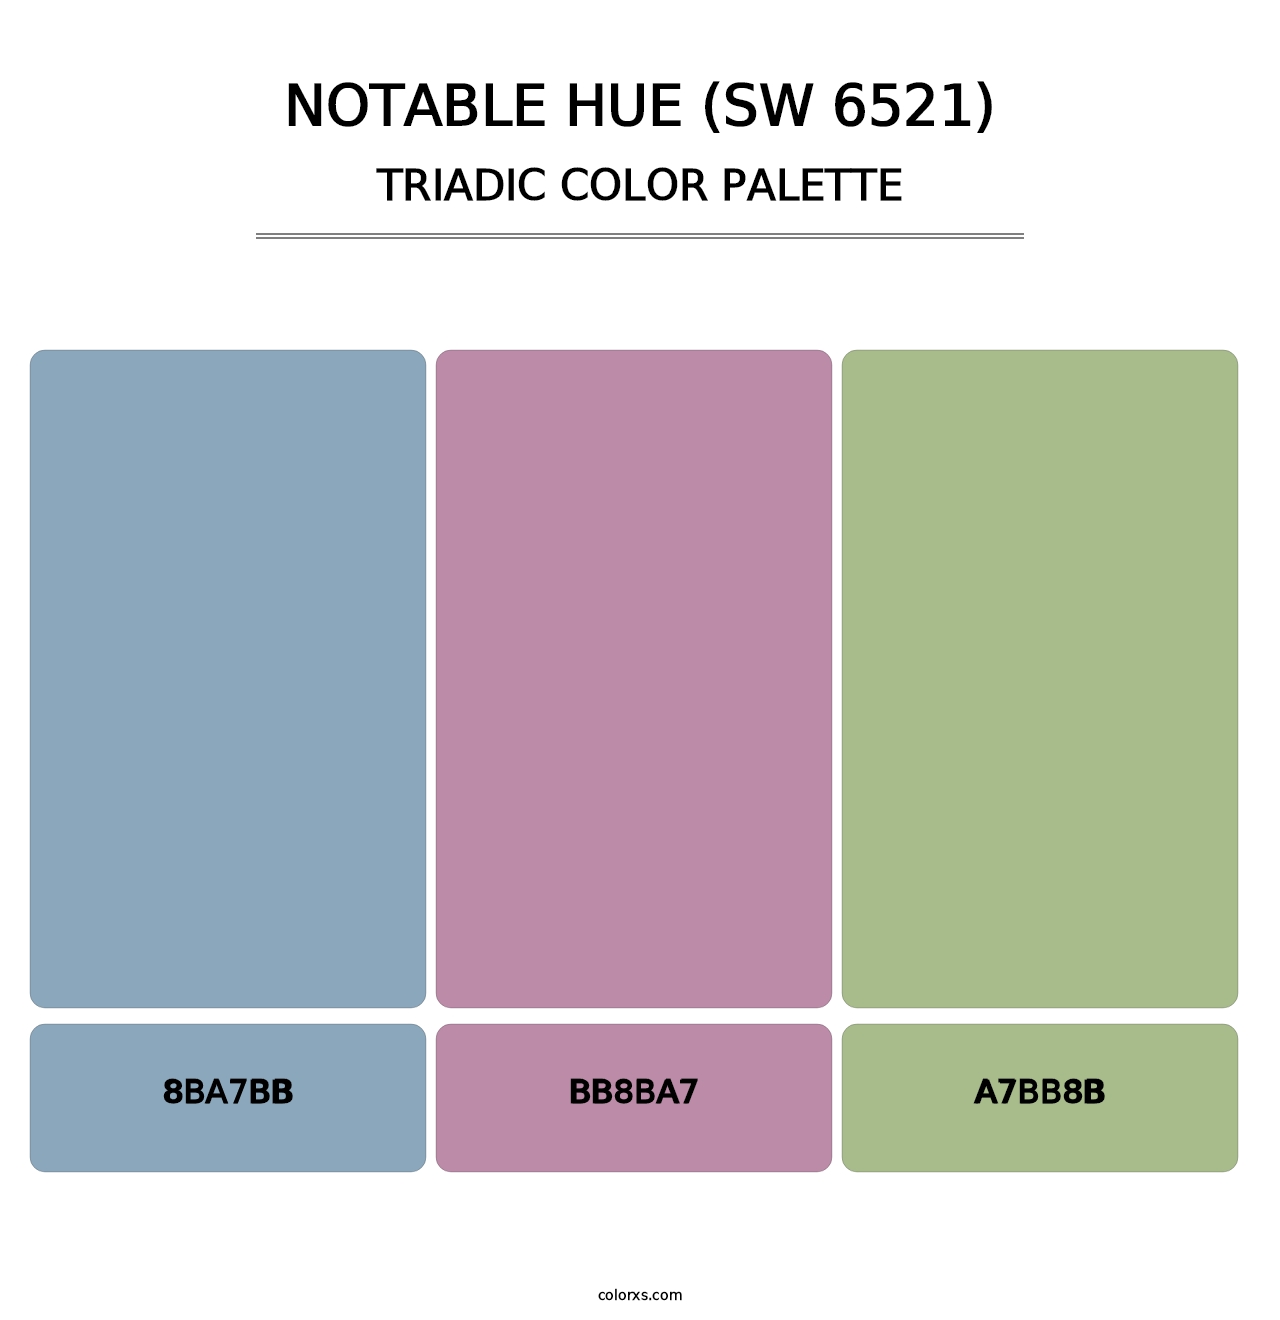 Notable Hue (SW 6521) - Triadic Color Palette